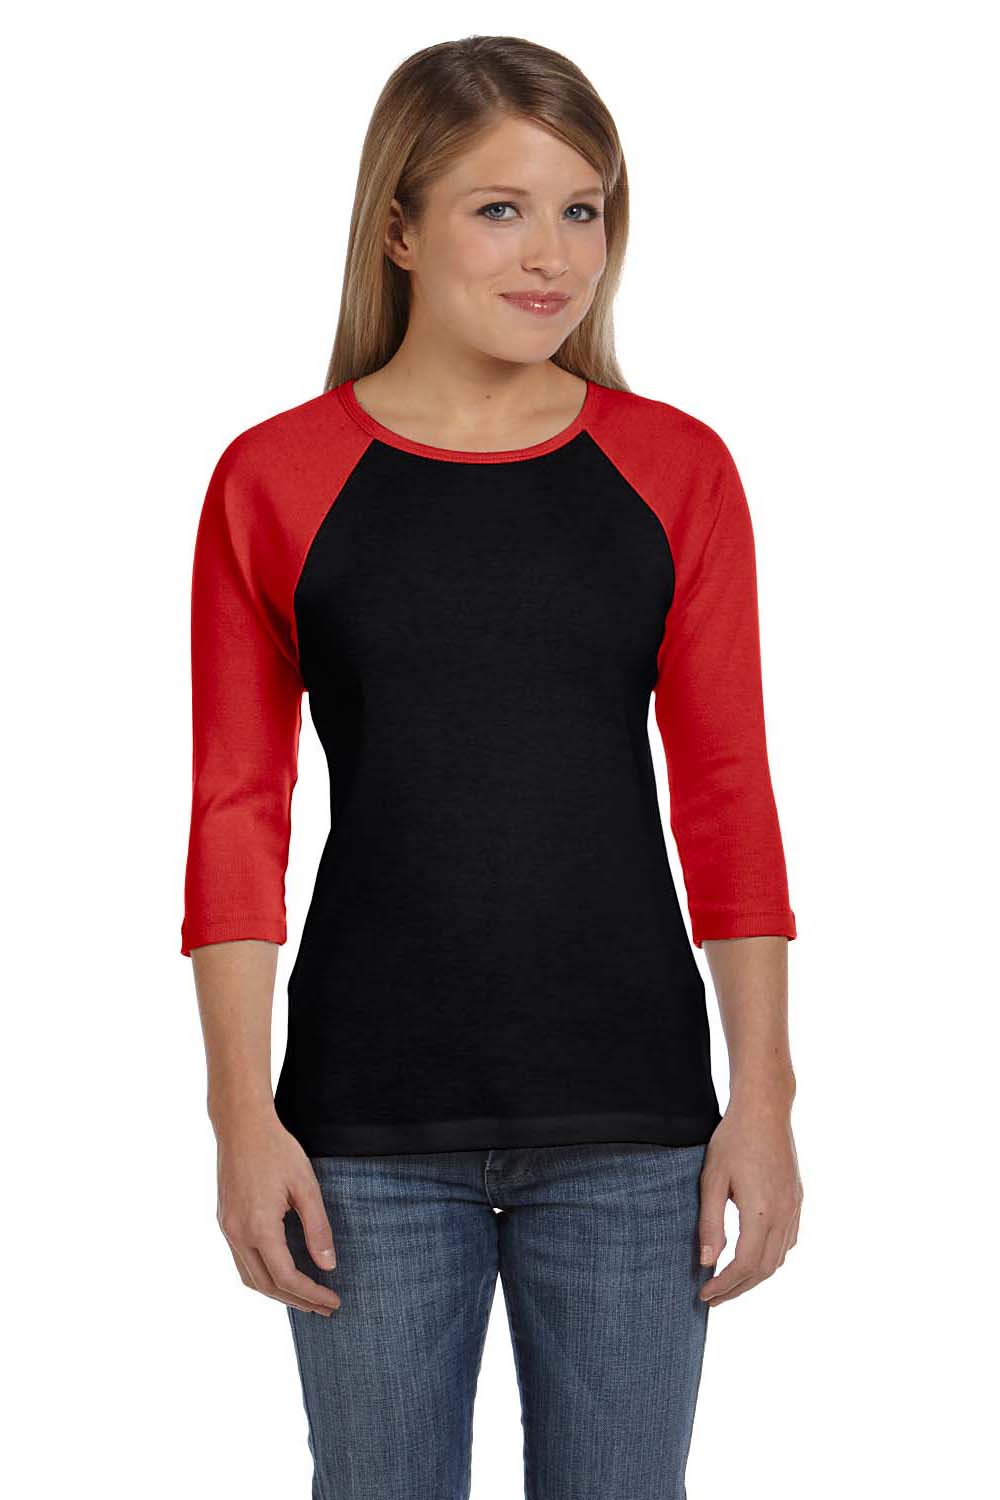 Bella + Canvas B2000 Womens 3/4 Sleeve Crewneck T-Shirt Black/Red Front